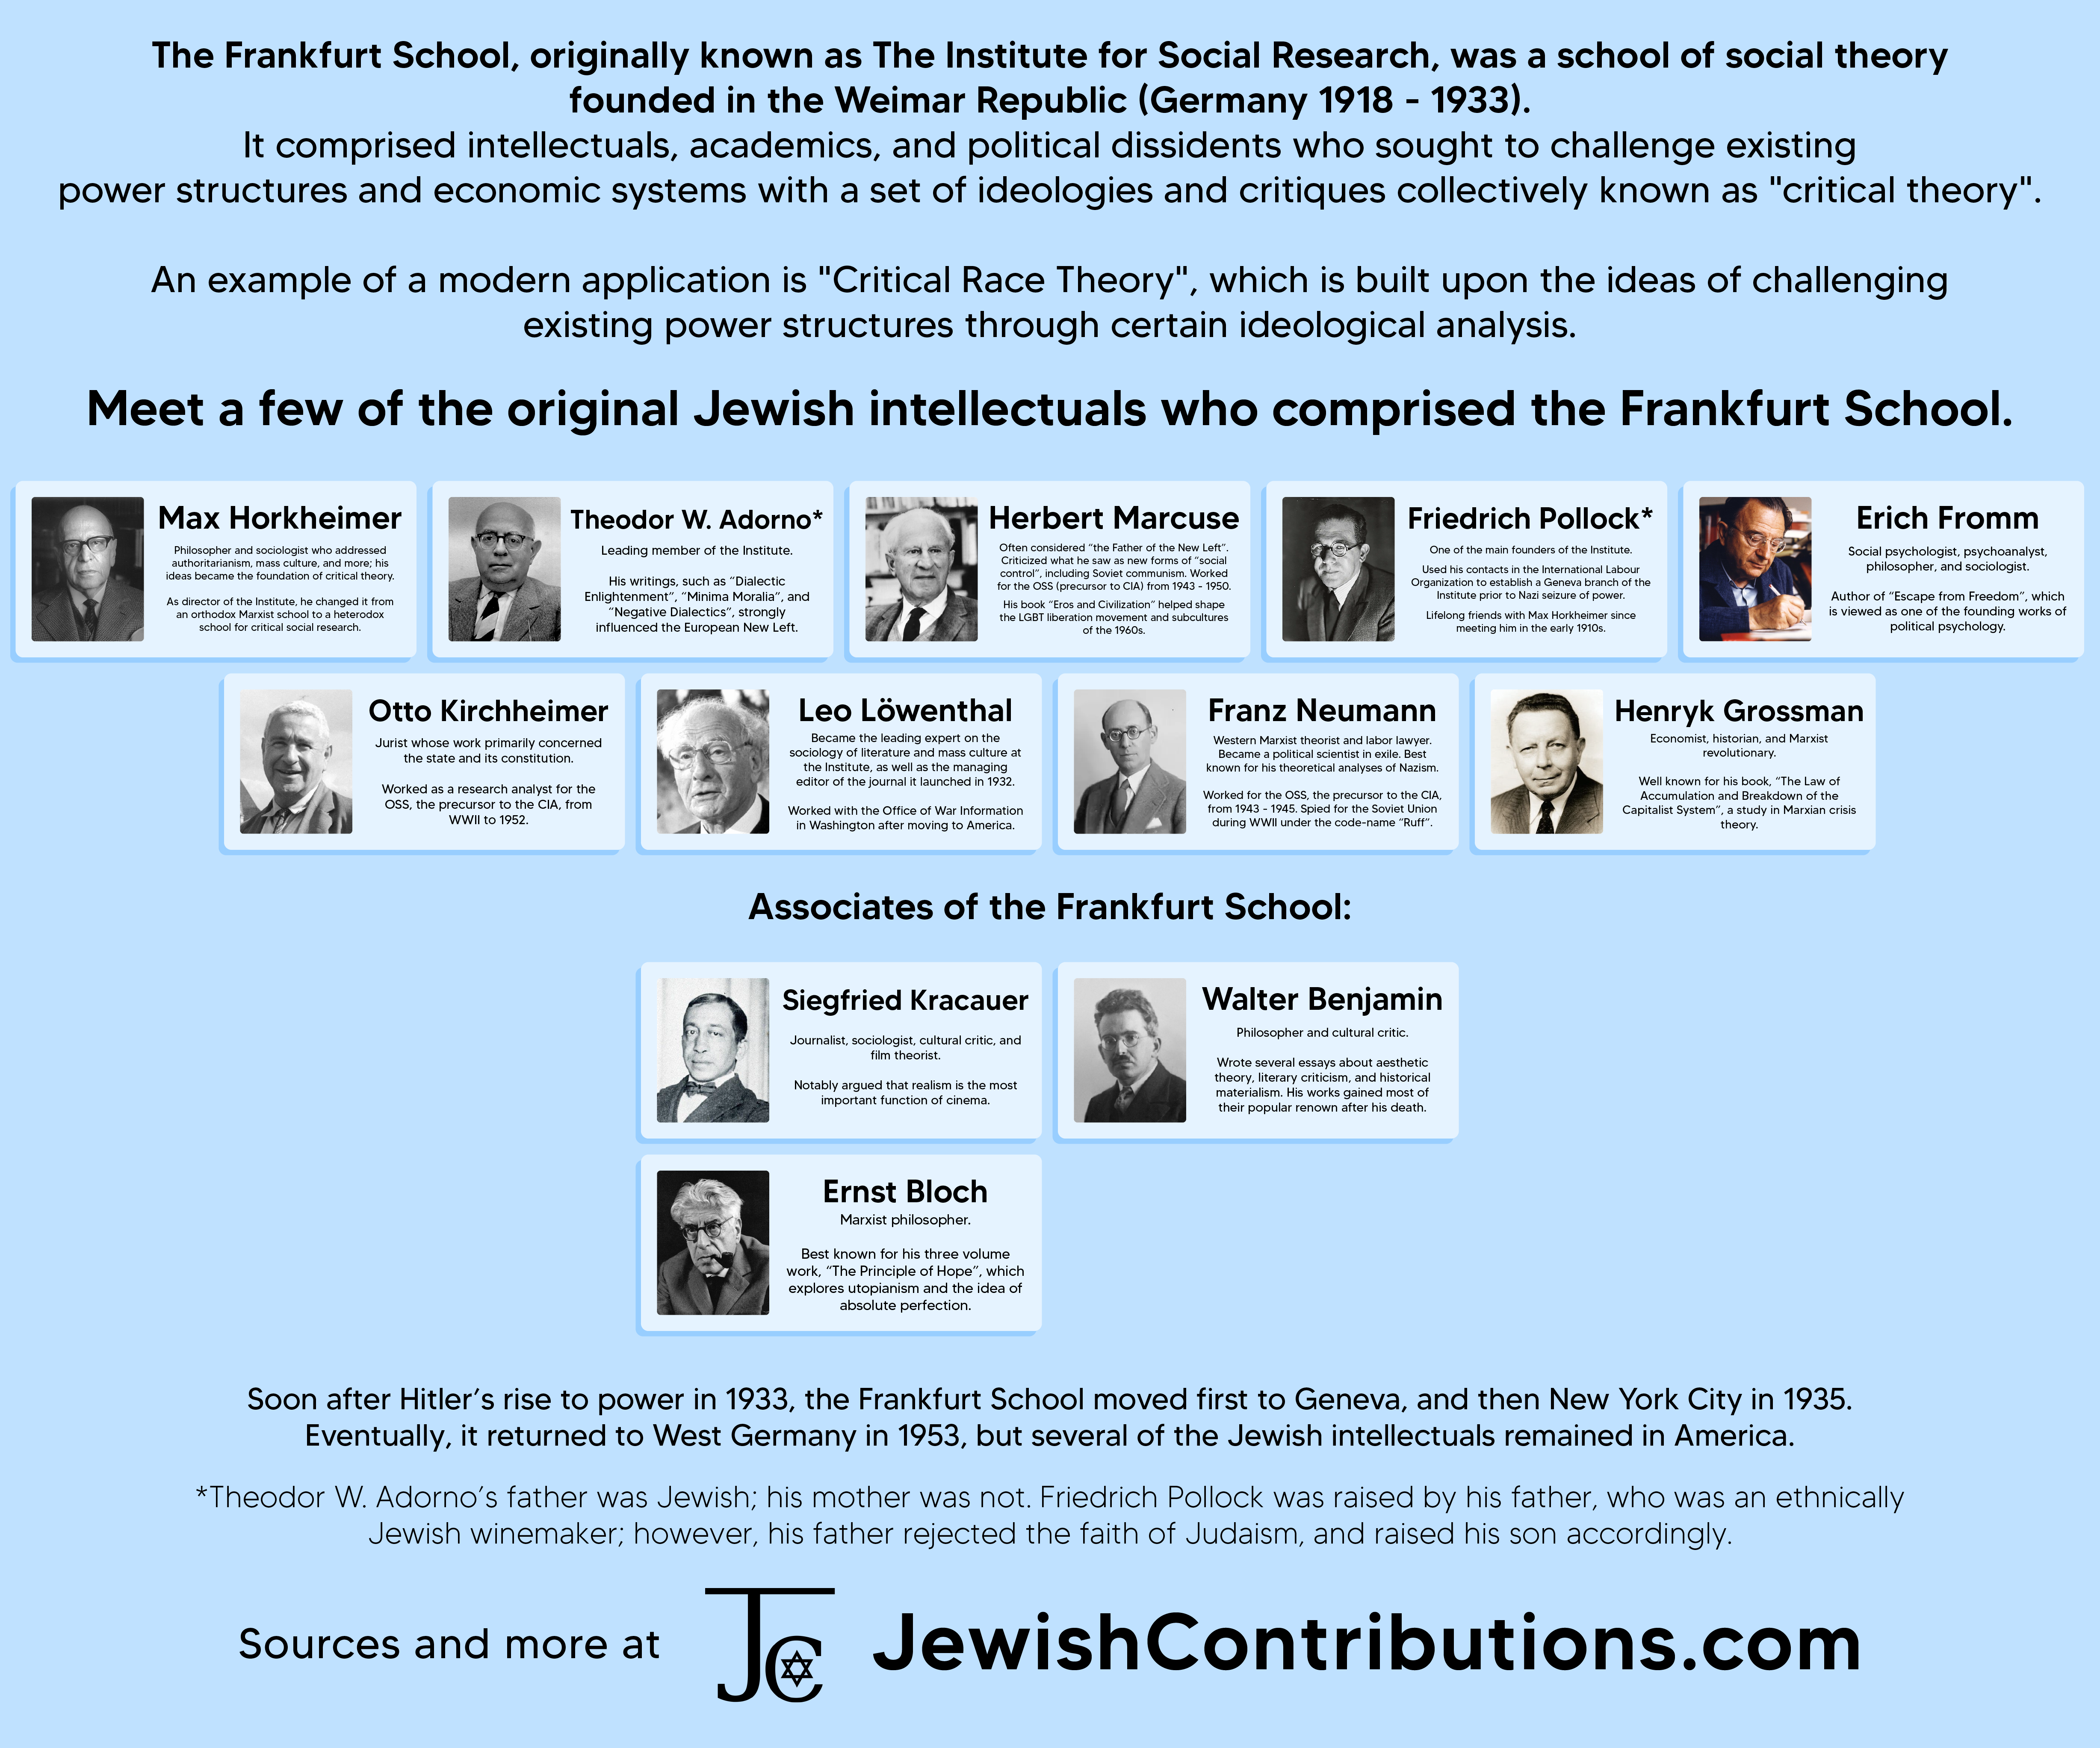 Nearly all of the original Frankfurt School intellectuals were Jewish.